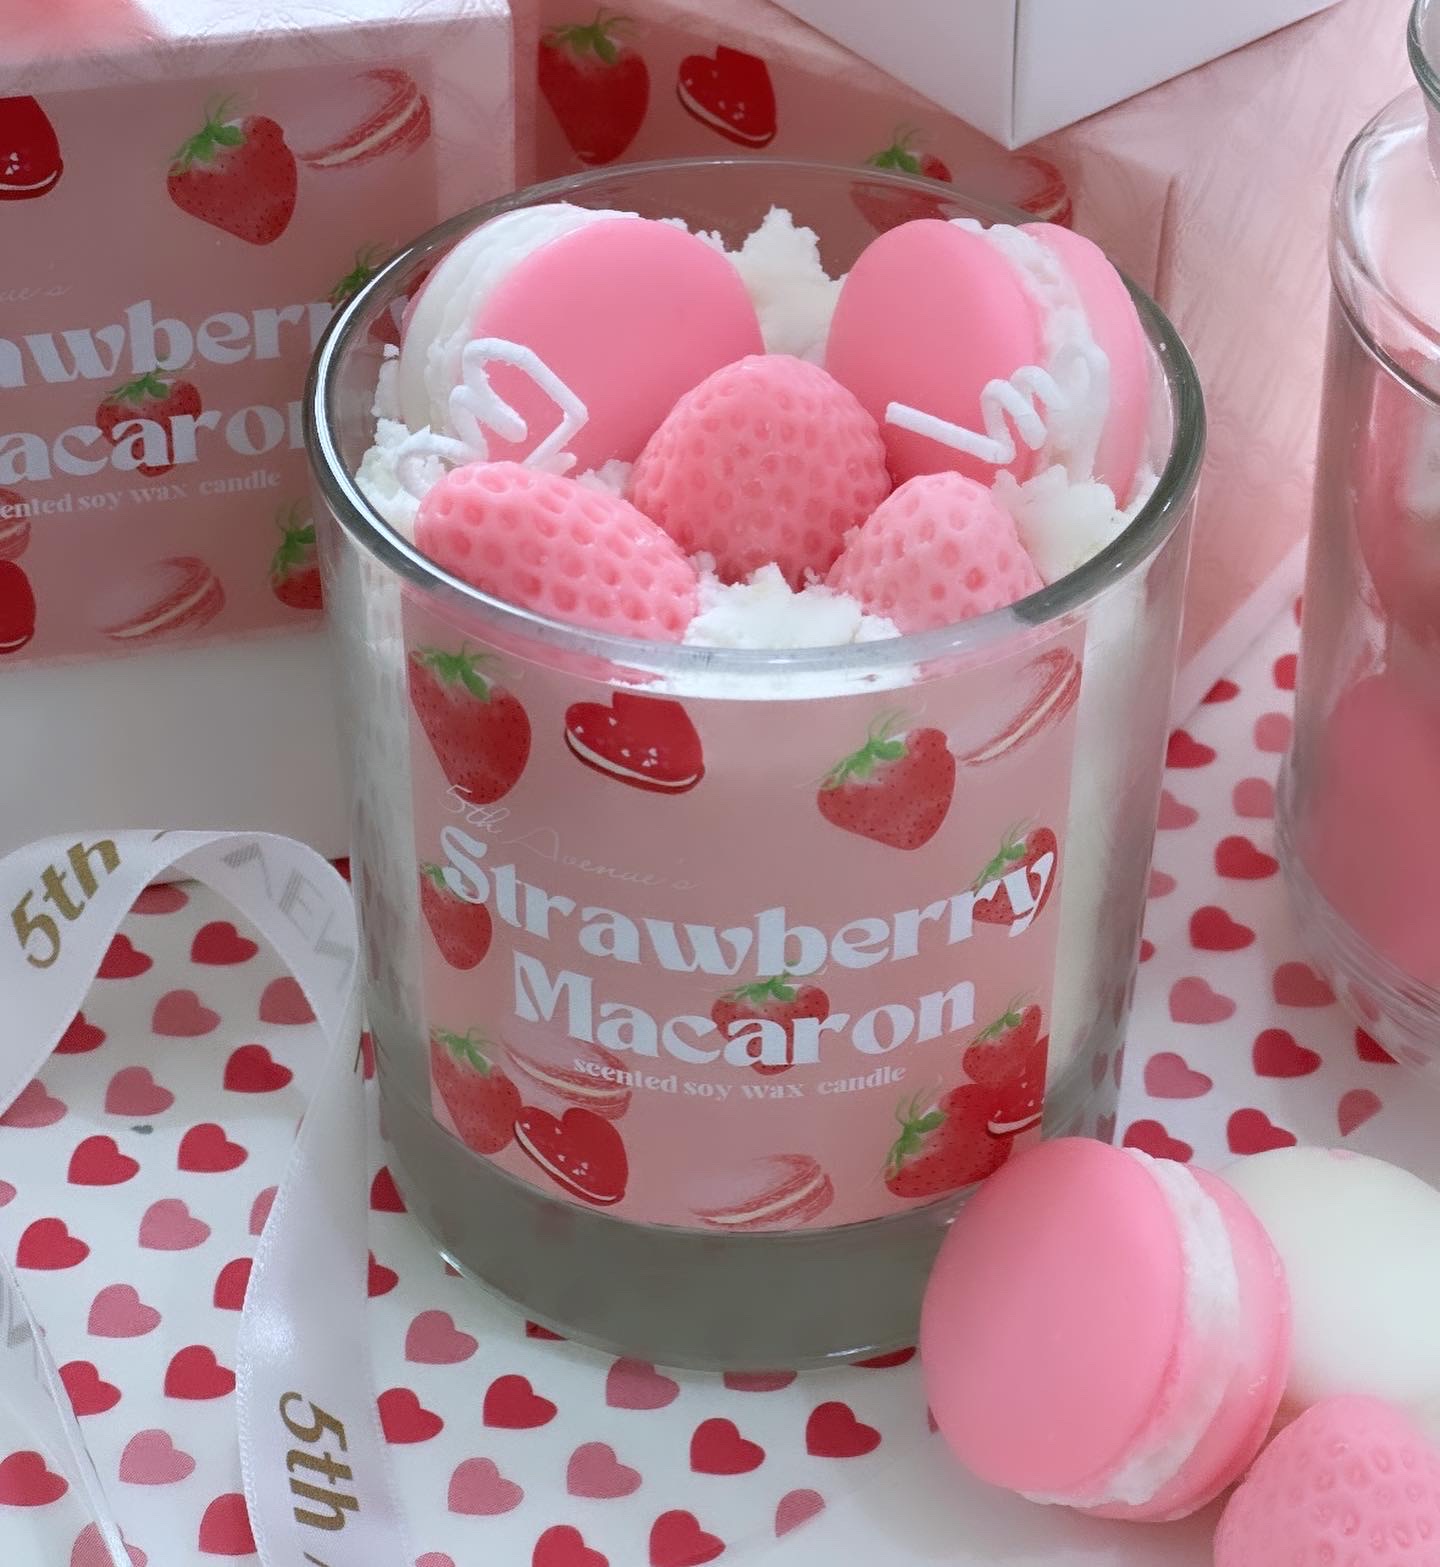 Strawberry & Macaron candle